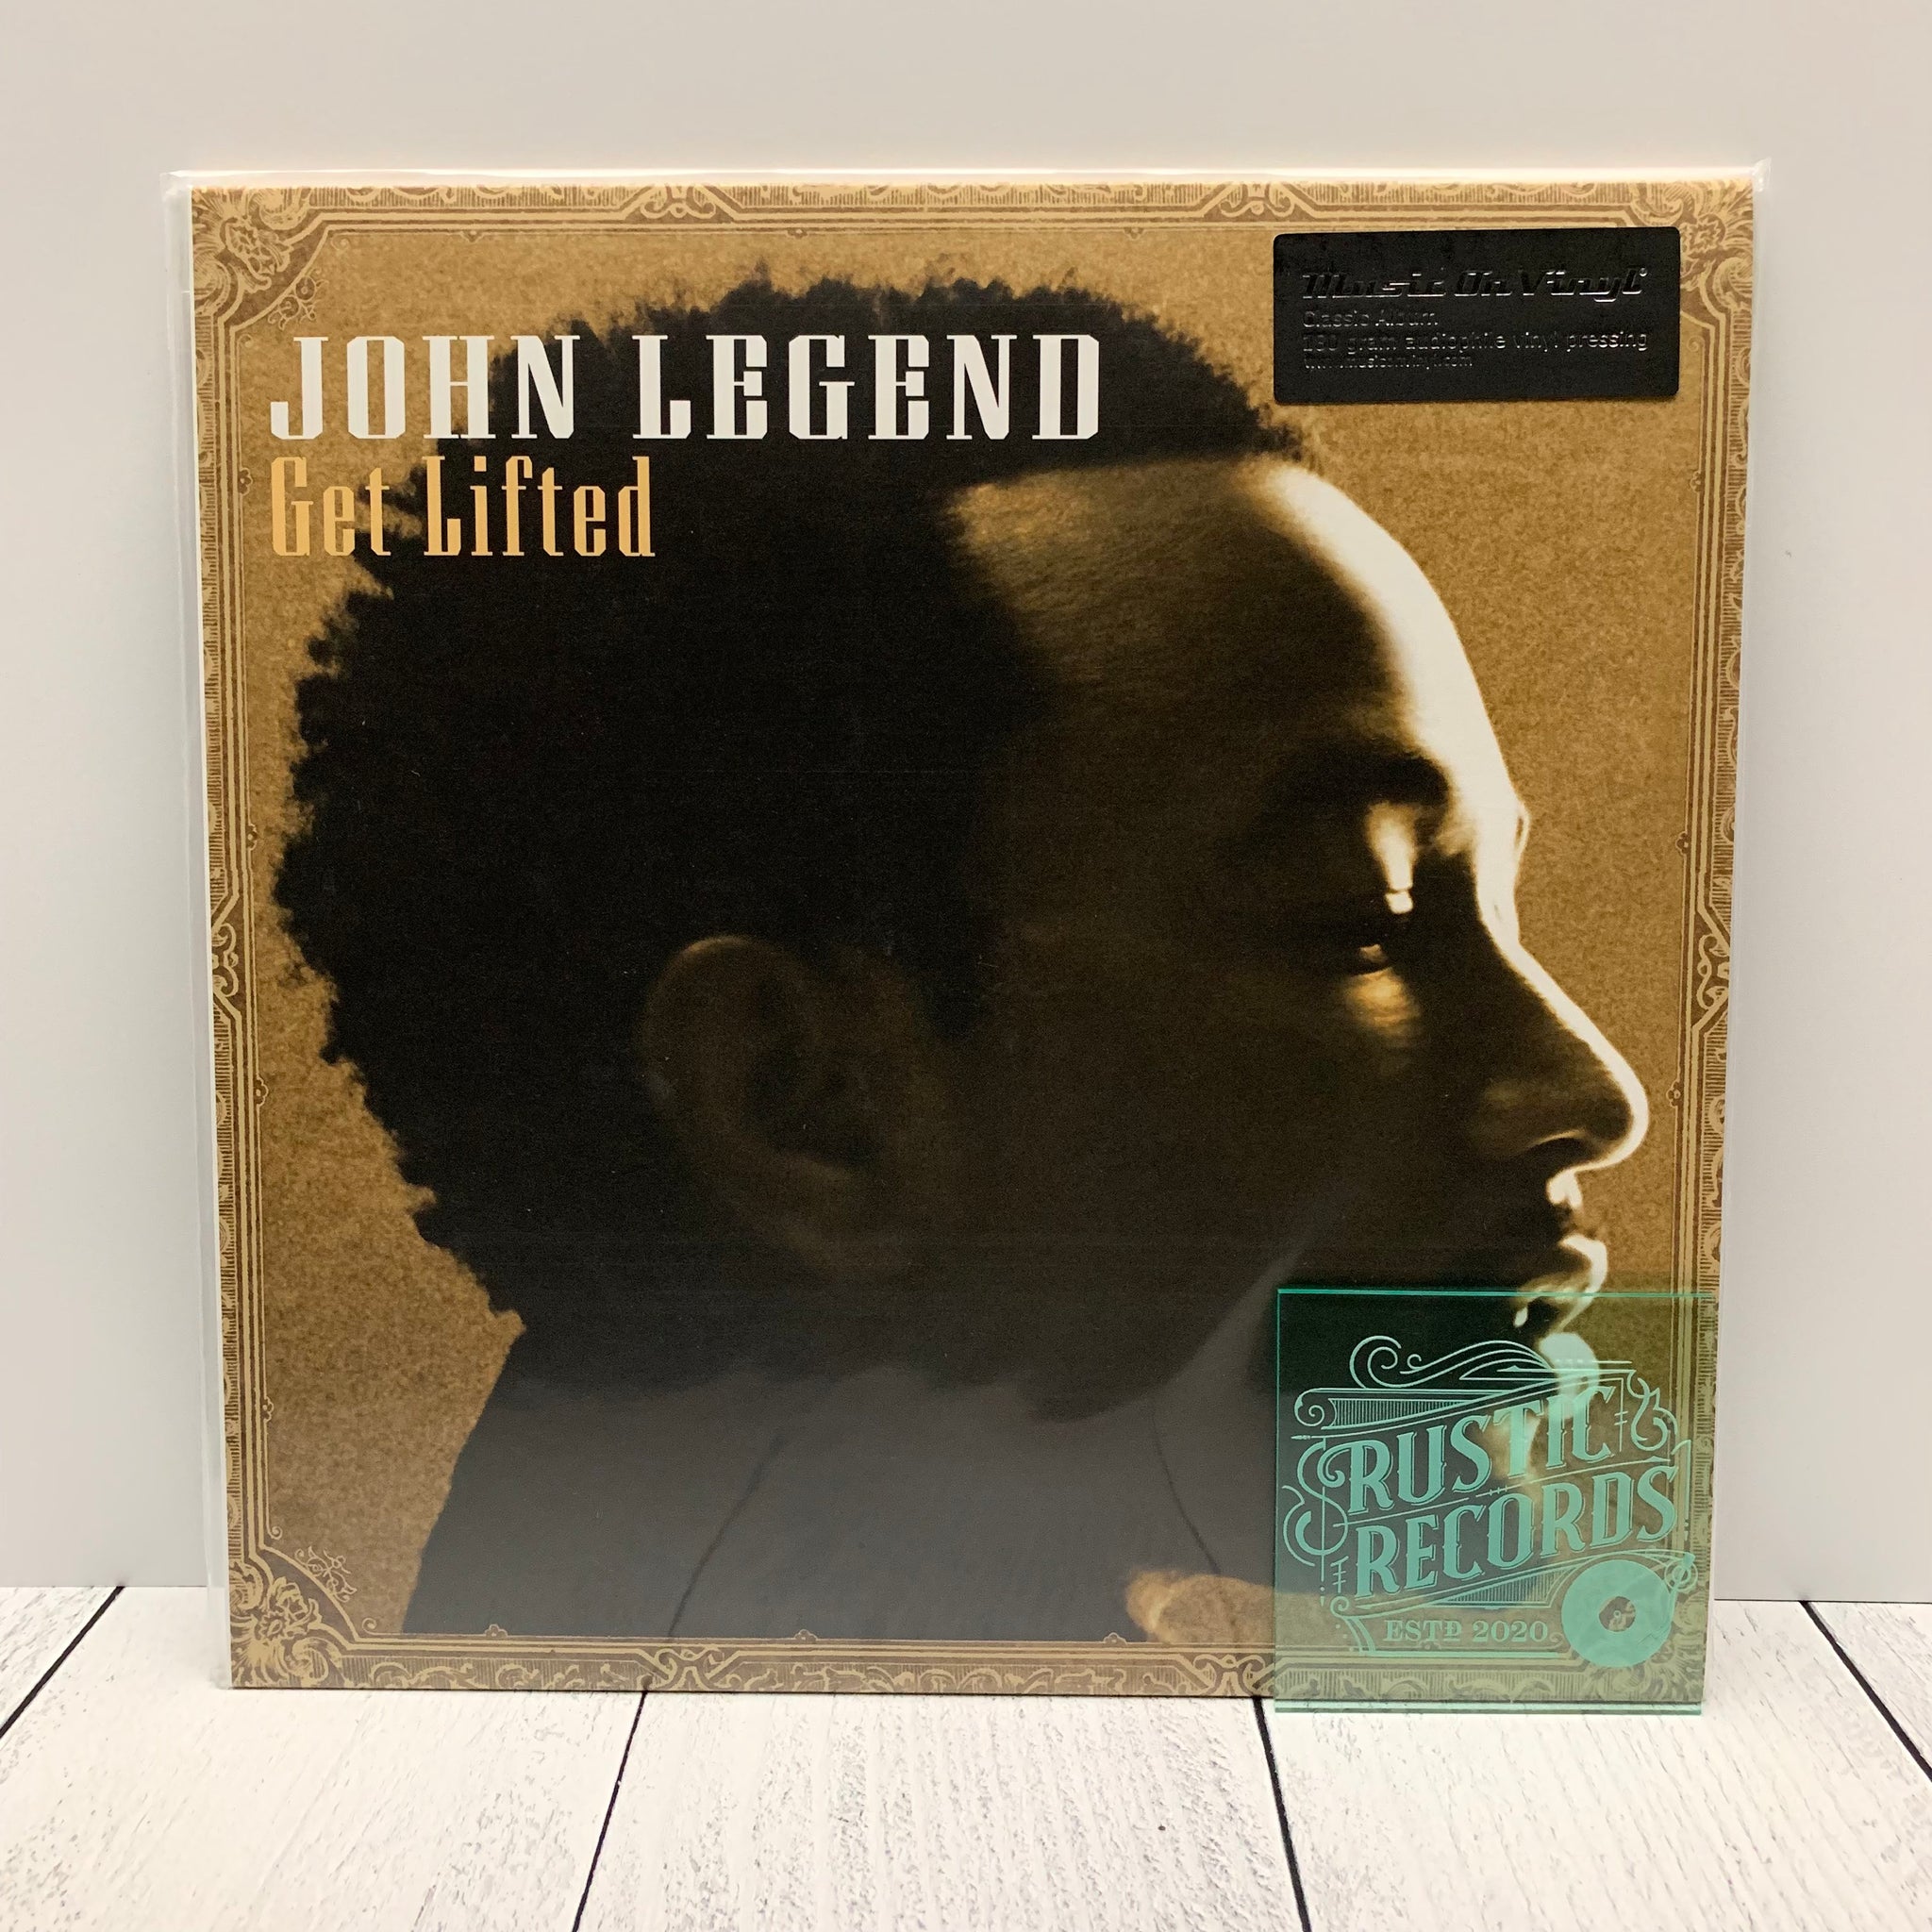 John Legend - Get Lifted (Music On Vinyl)